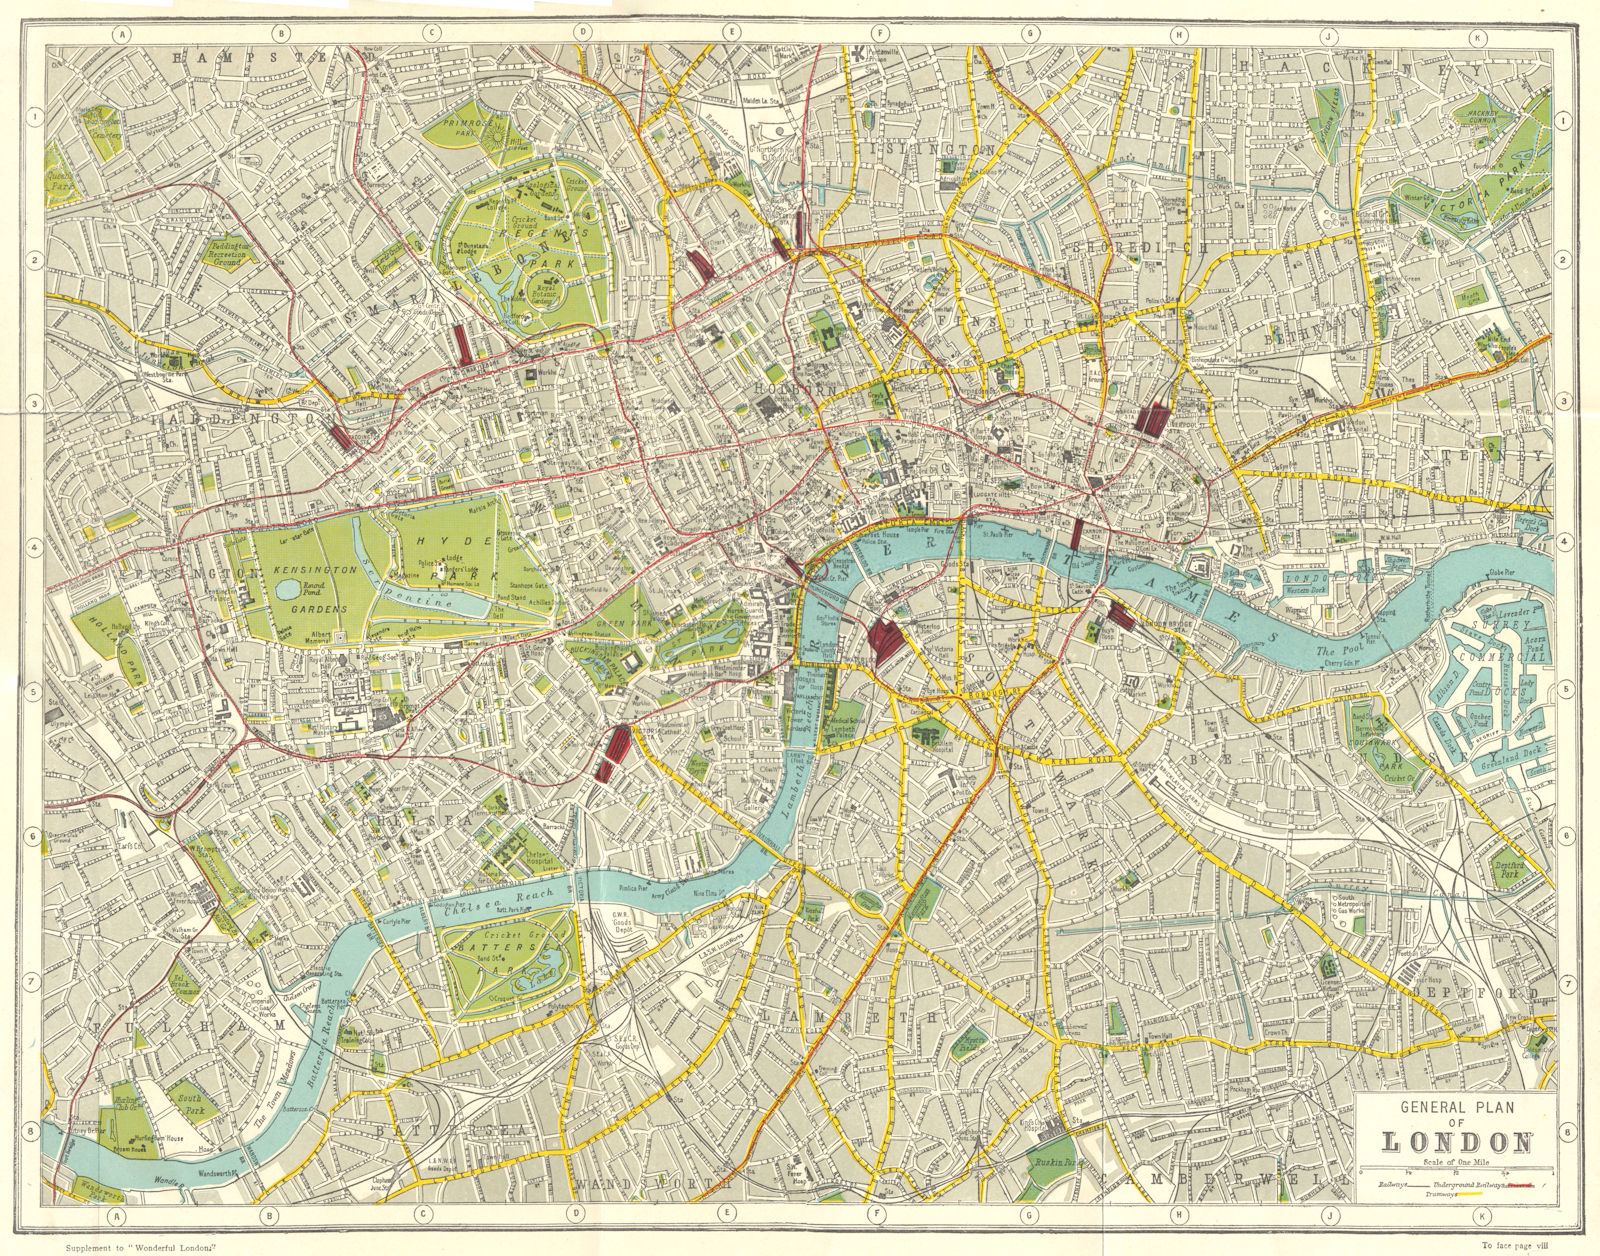 LONDON. General plan of London 1926 old vintage map chart